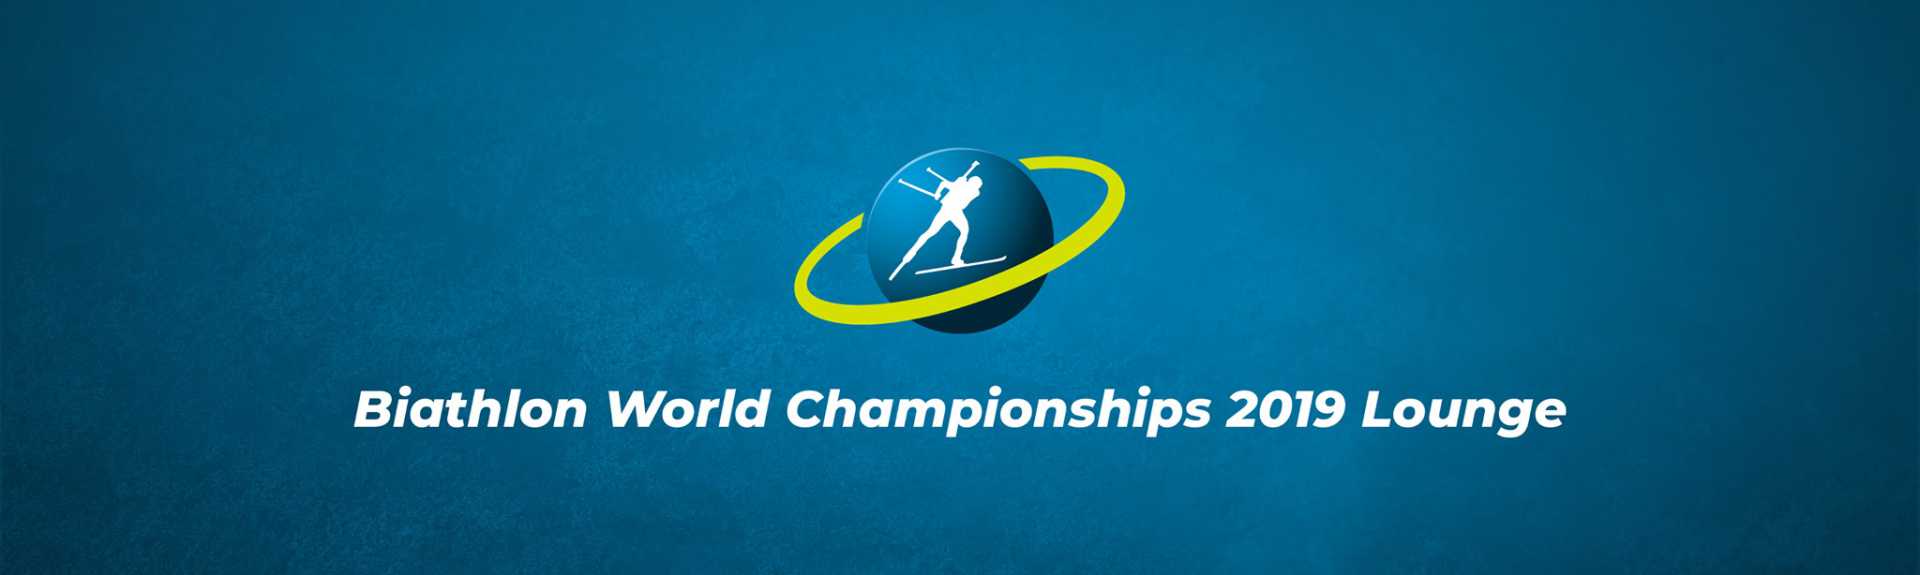 Biathlon World Championships 2019 Lounge